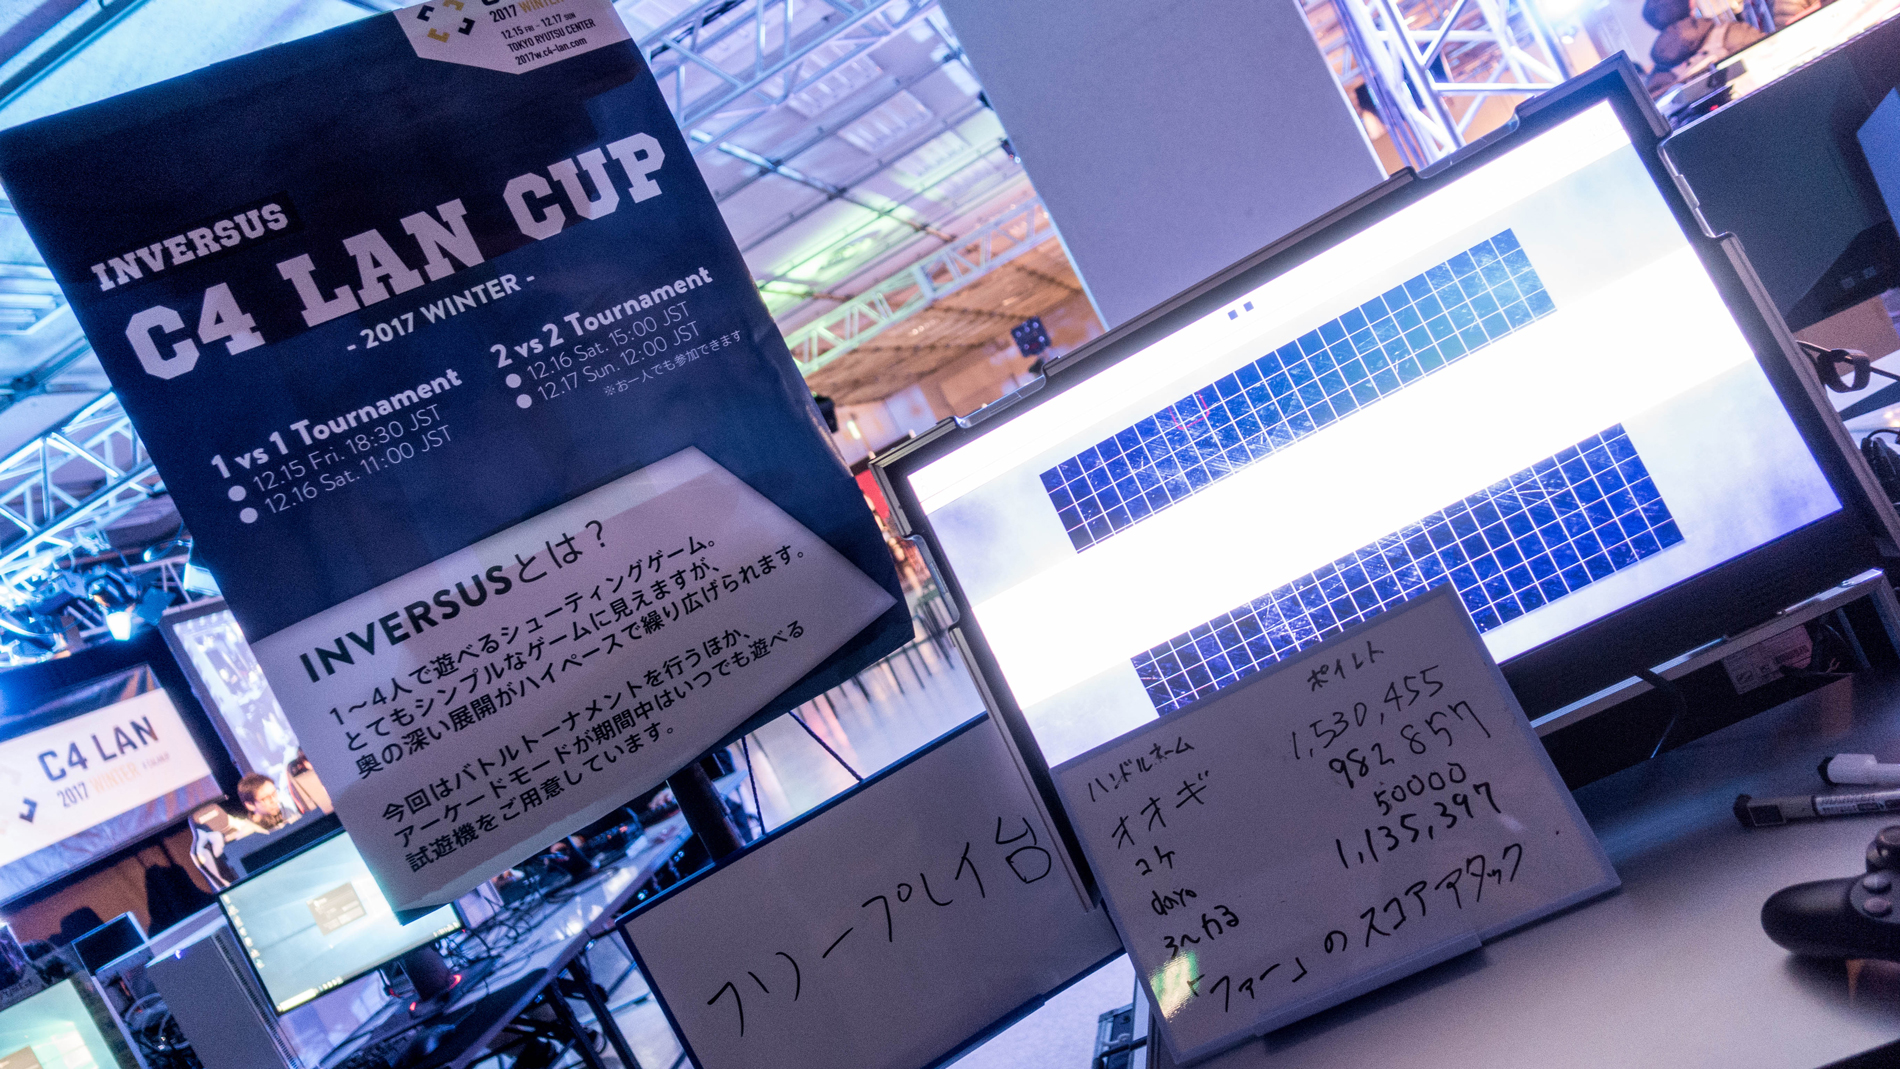 結果報告：C4 LAN CUP 2017 WINTER